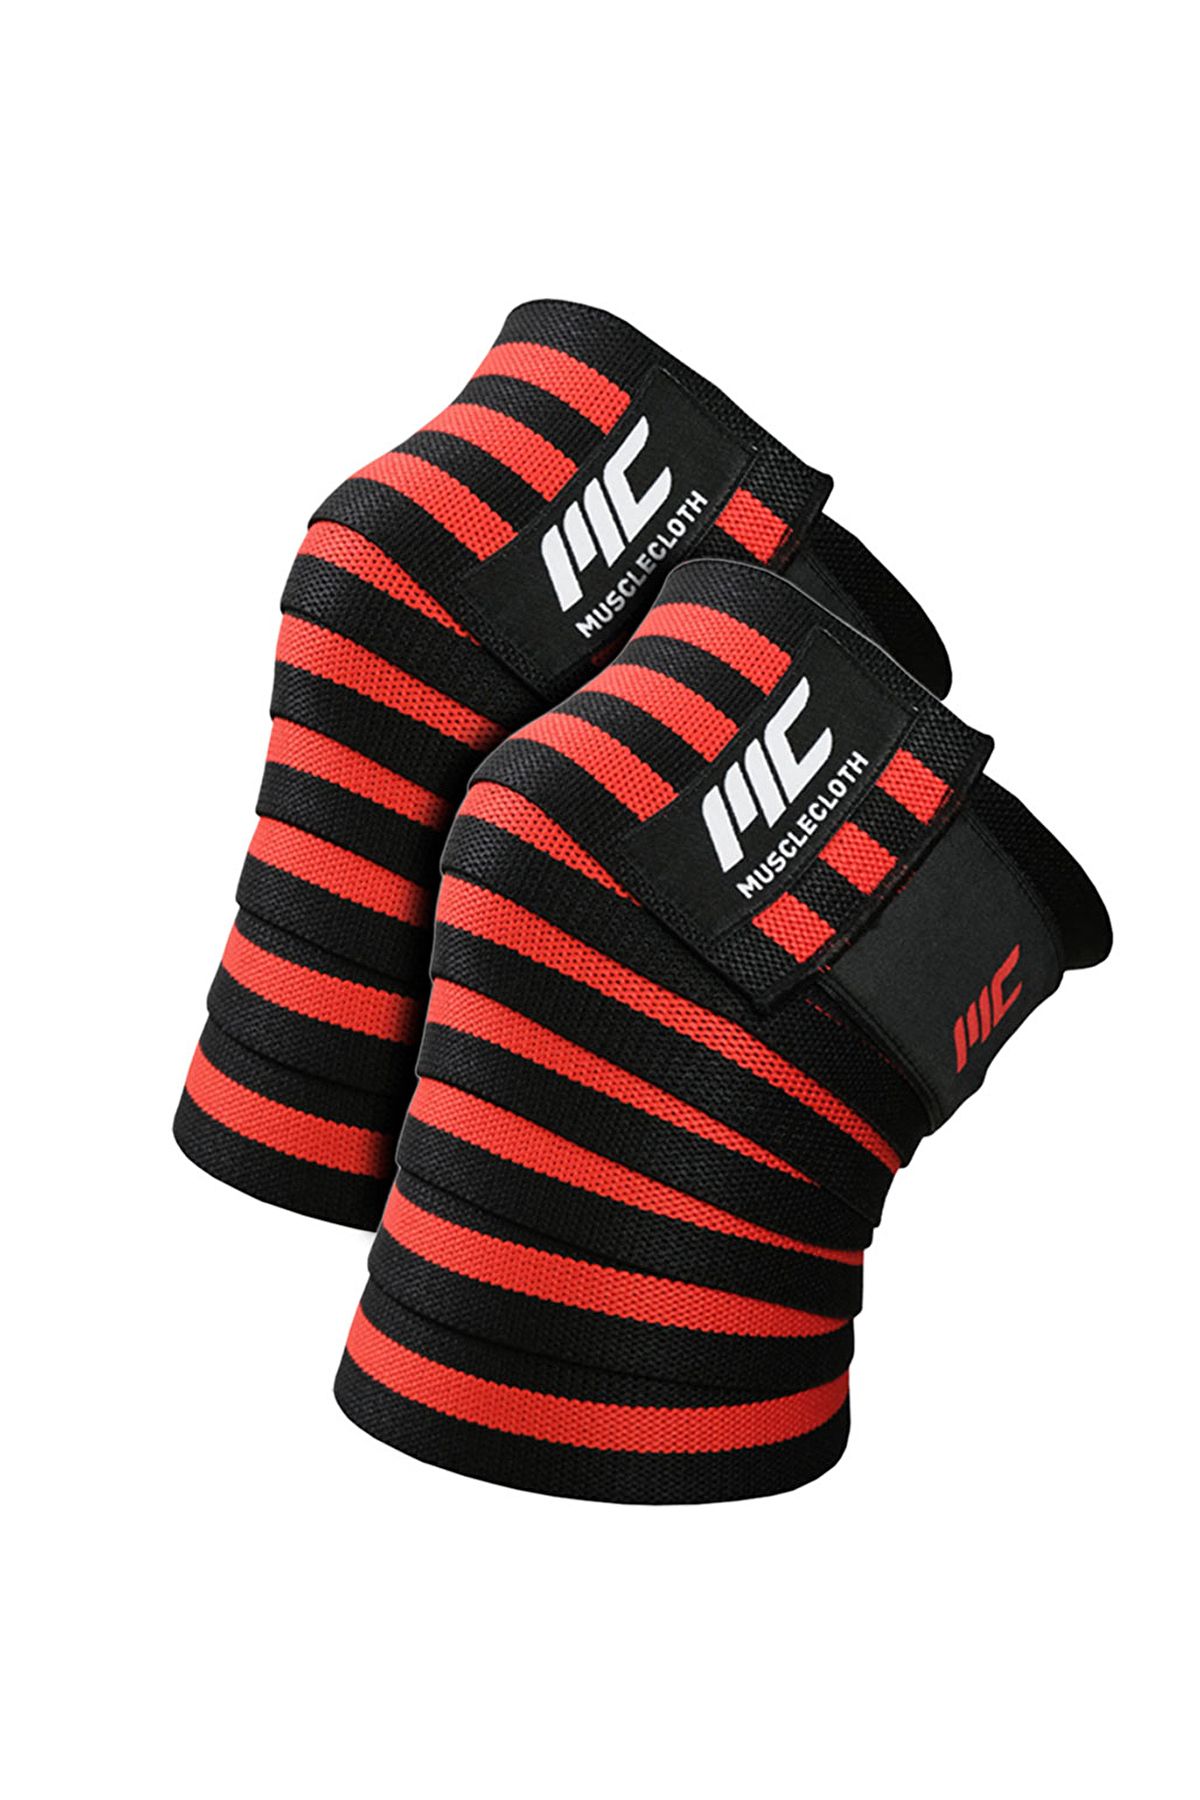 MUSCLECLOTH Pro Knee Wraps Diz Bandajı 2'li Paket - Cırt Bantlı Siyah Kırmızı